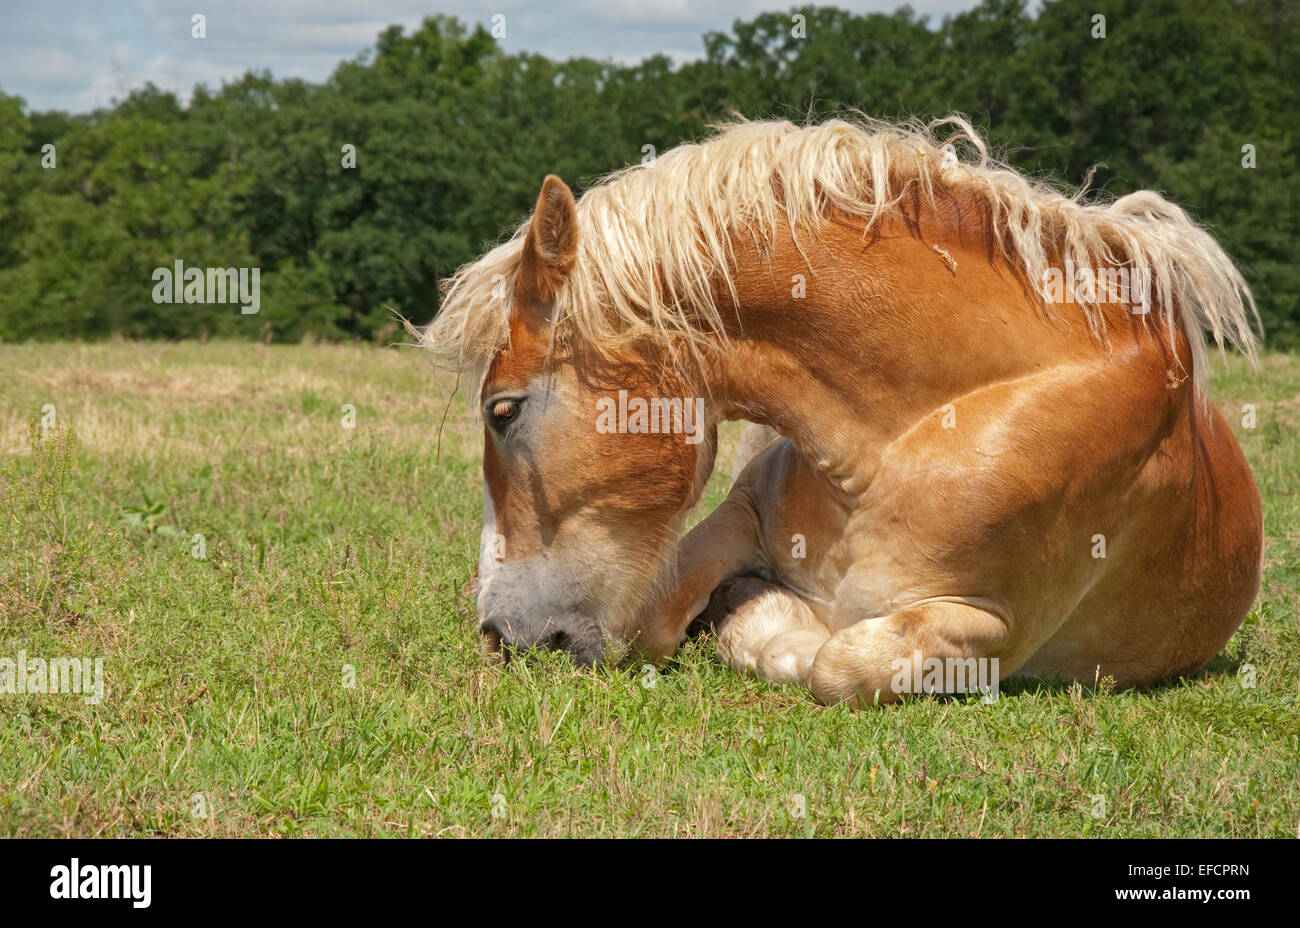 Lazy Belgian Draft horse eating while lying down on ground Stock Photo